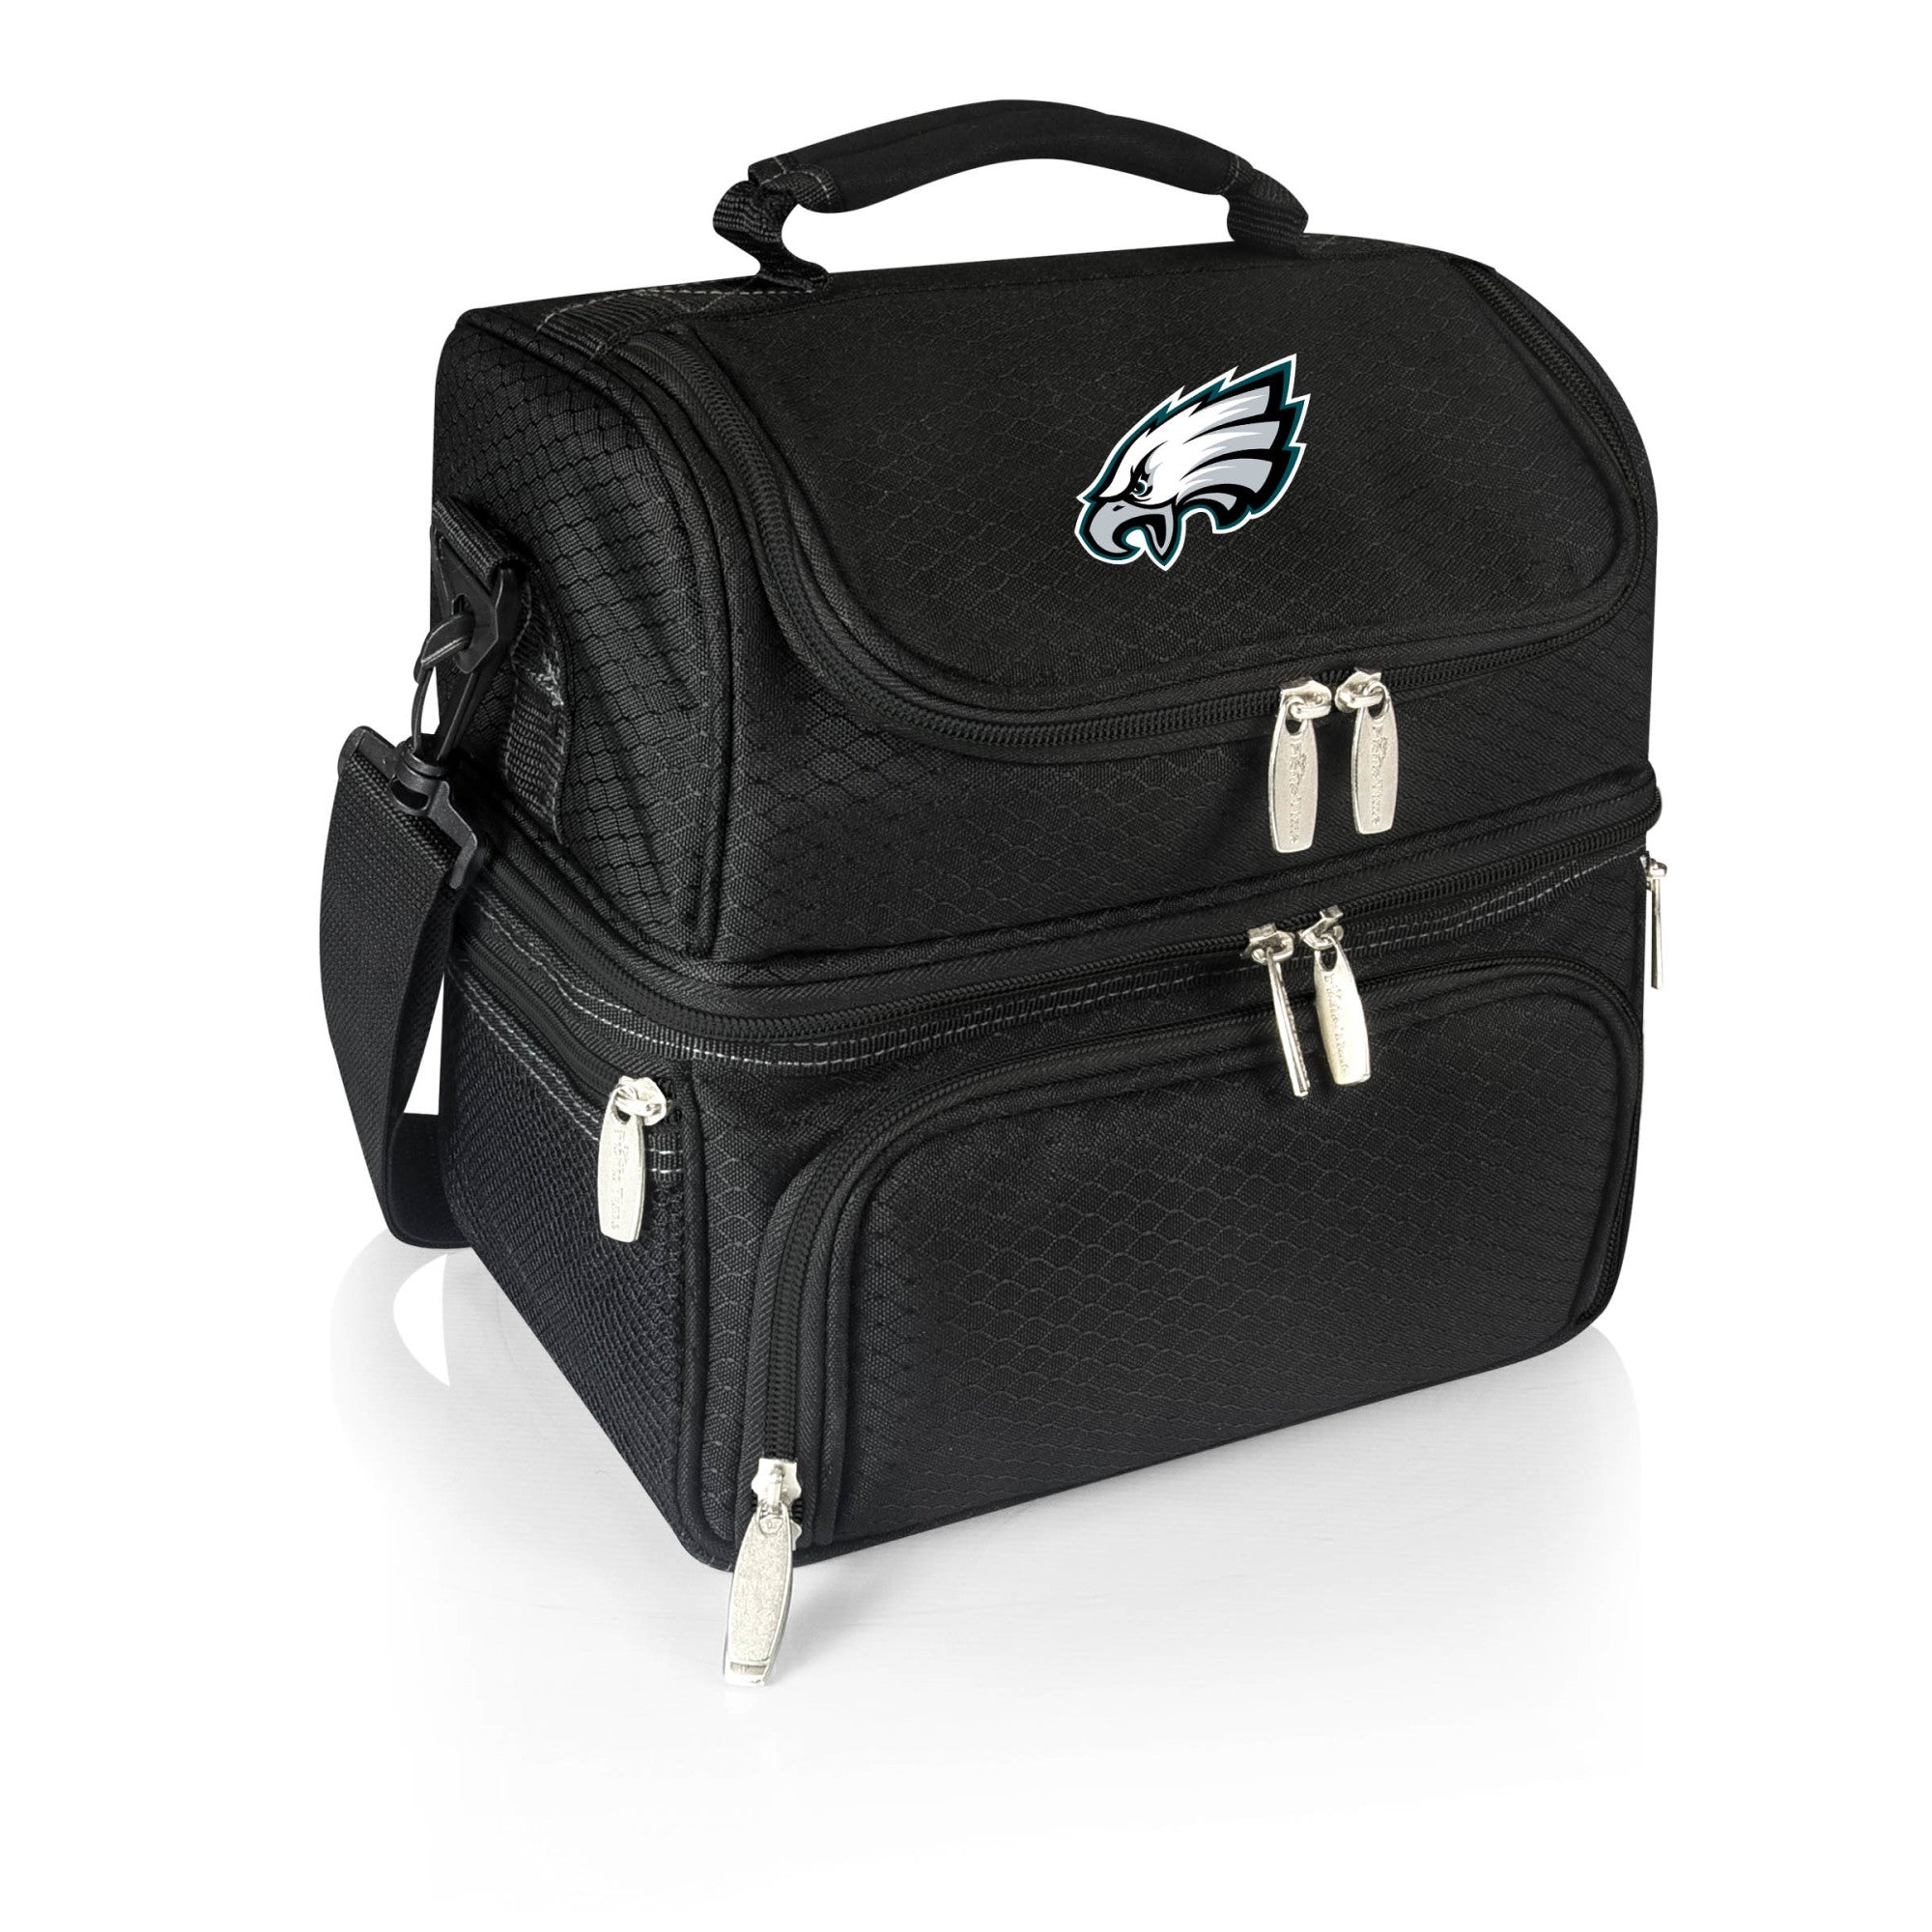 Philadelphia Eagles - Pranzo Lunch Bag Cooler with Utensils